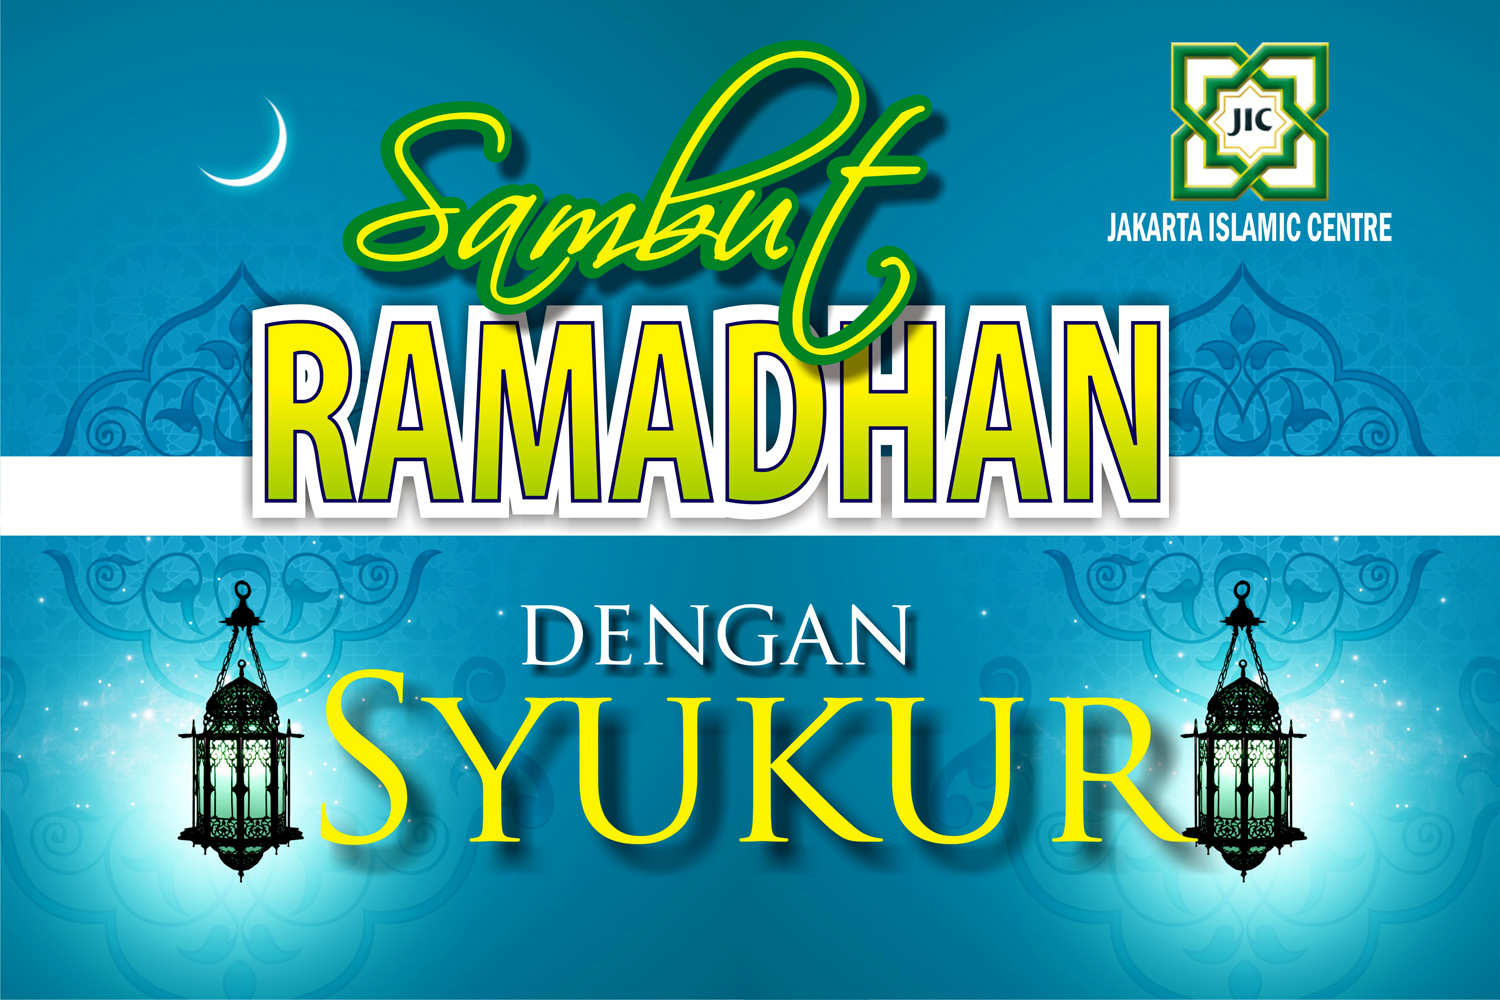 jasa desain: Desain Banner, Spanduk Ramadhan Mitra Jakarta Islamic Centre